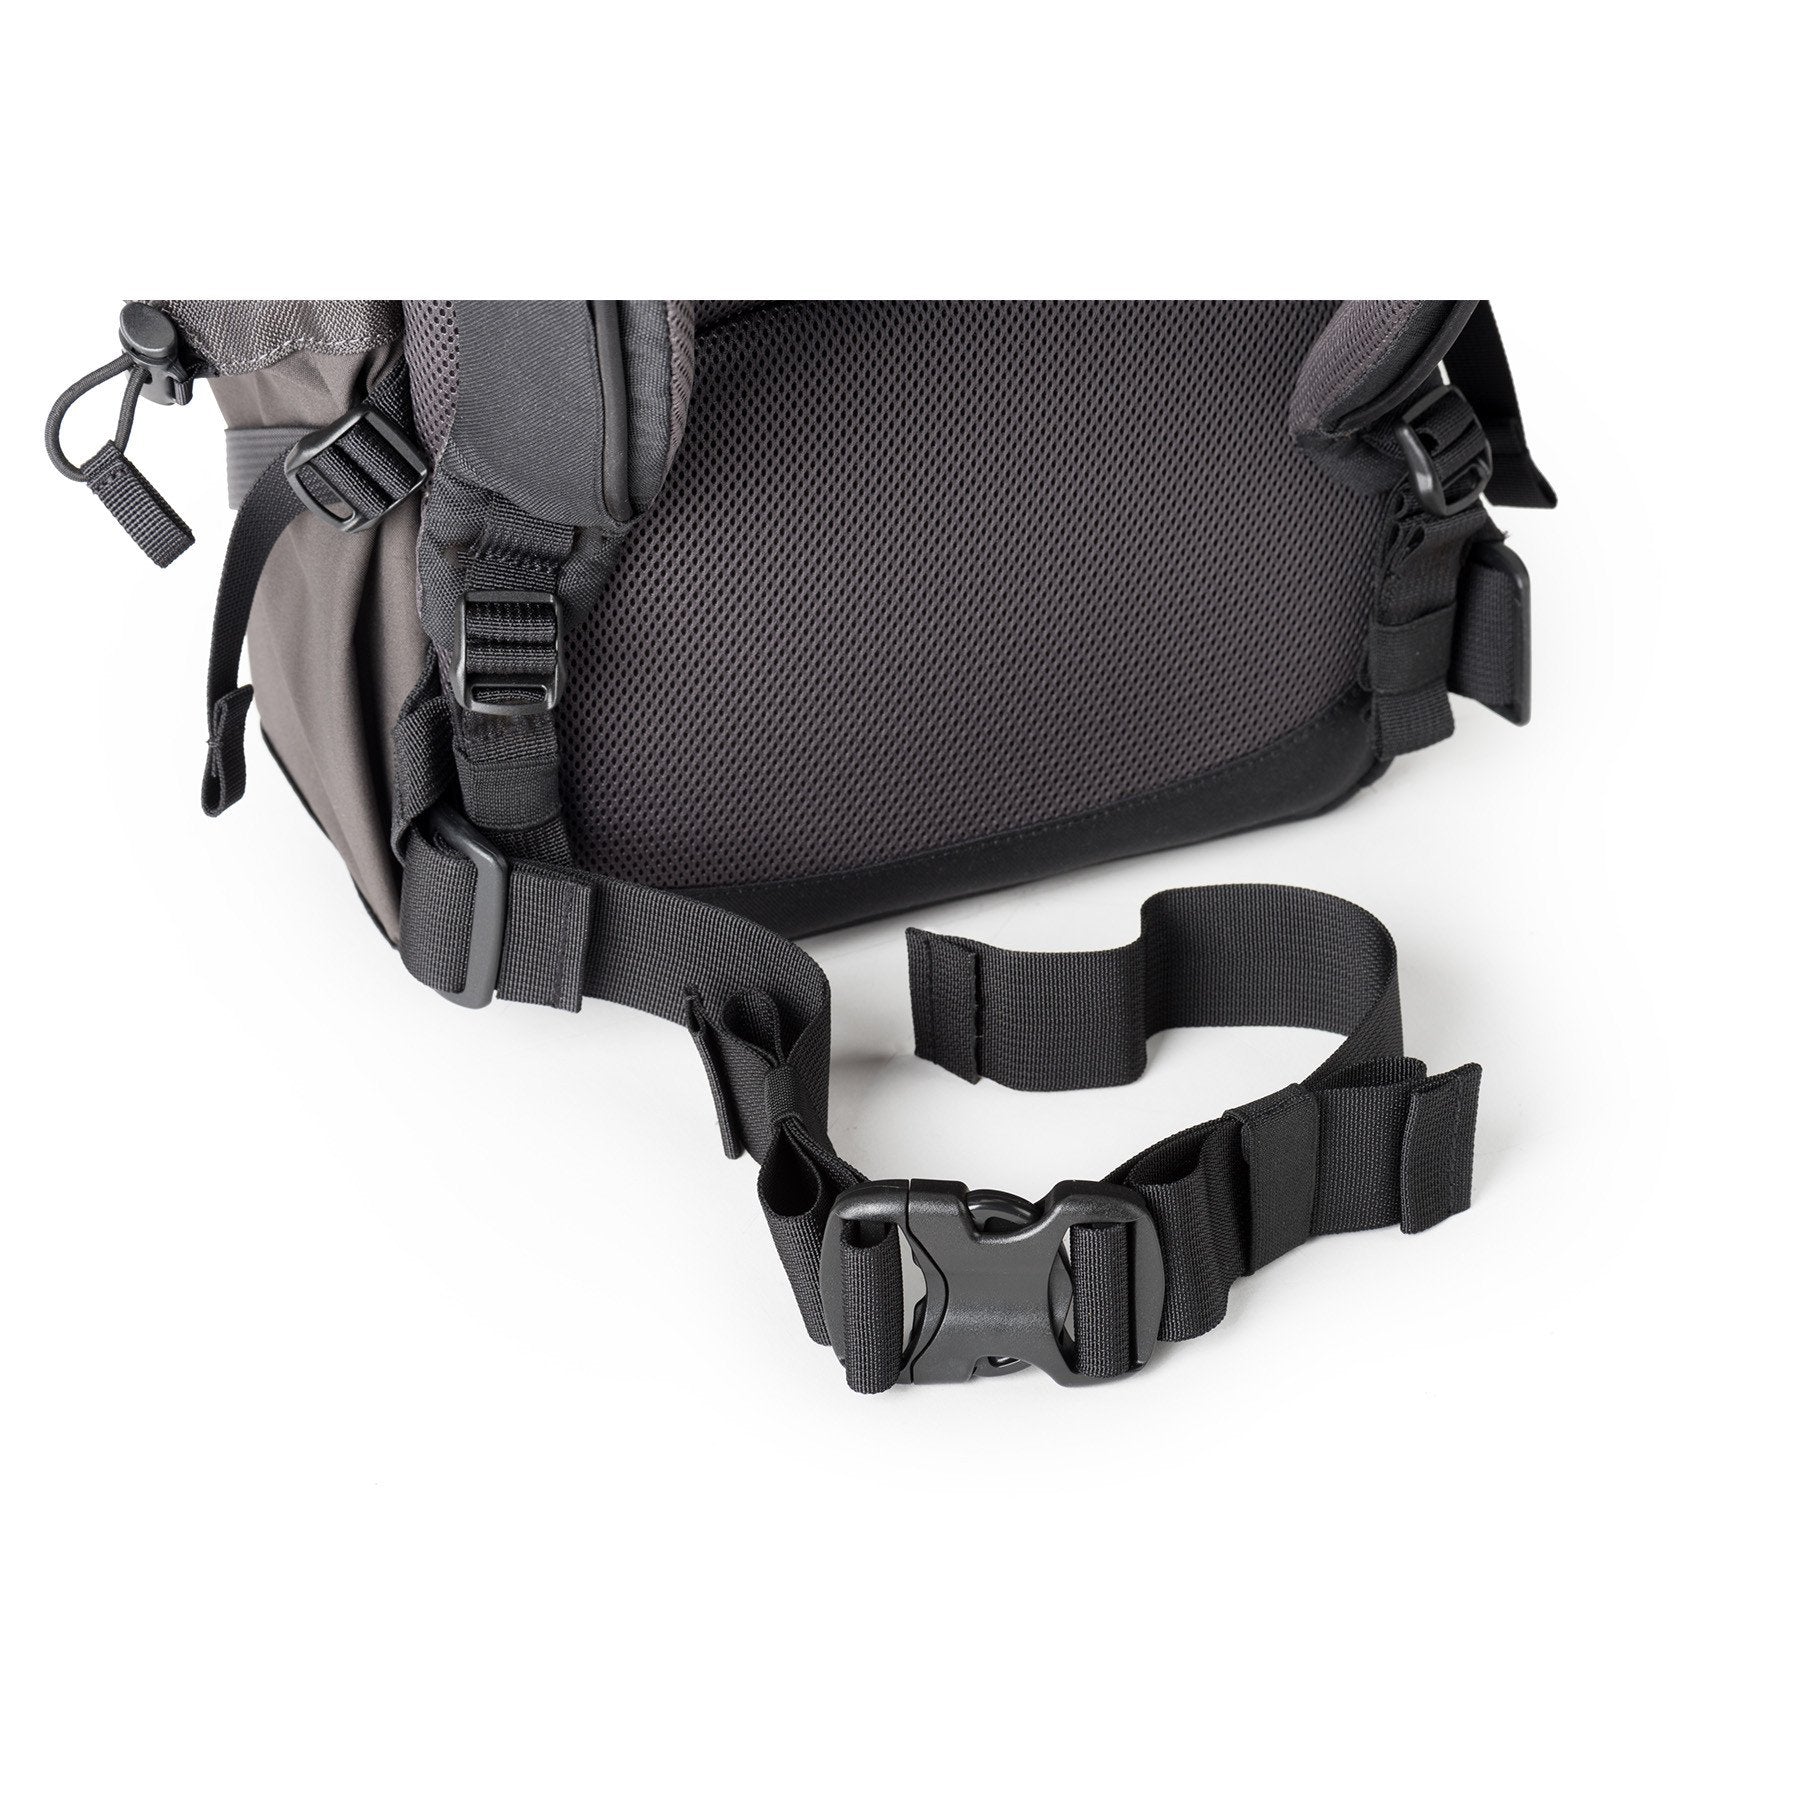 MindShift TrailScape 18L - Removable webbing waist belt to help stabilize the bag while active